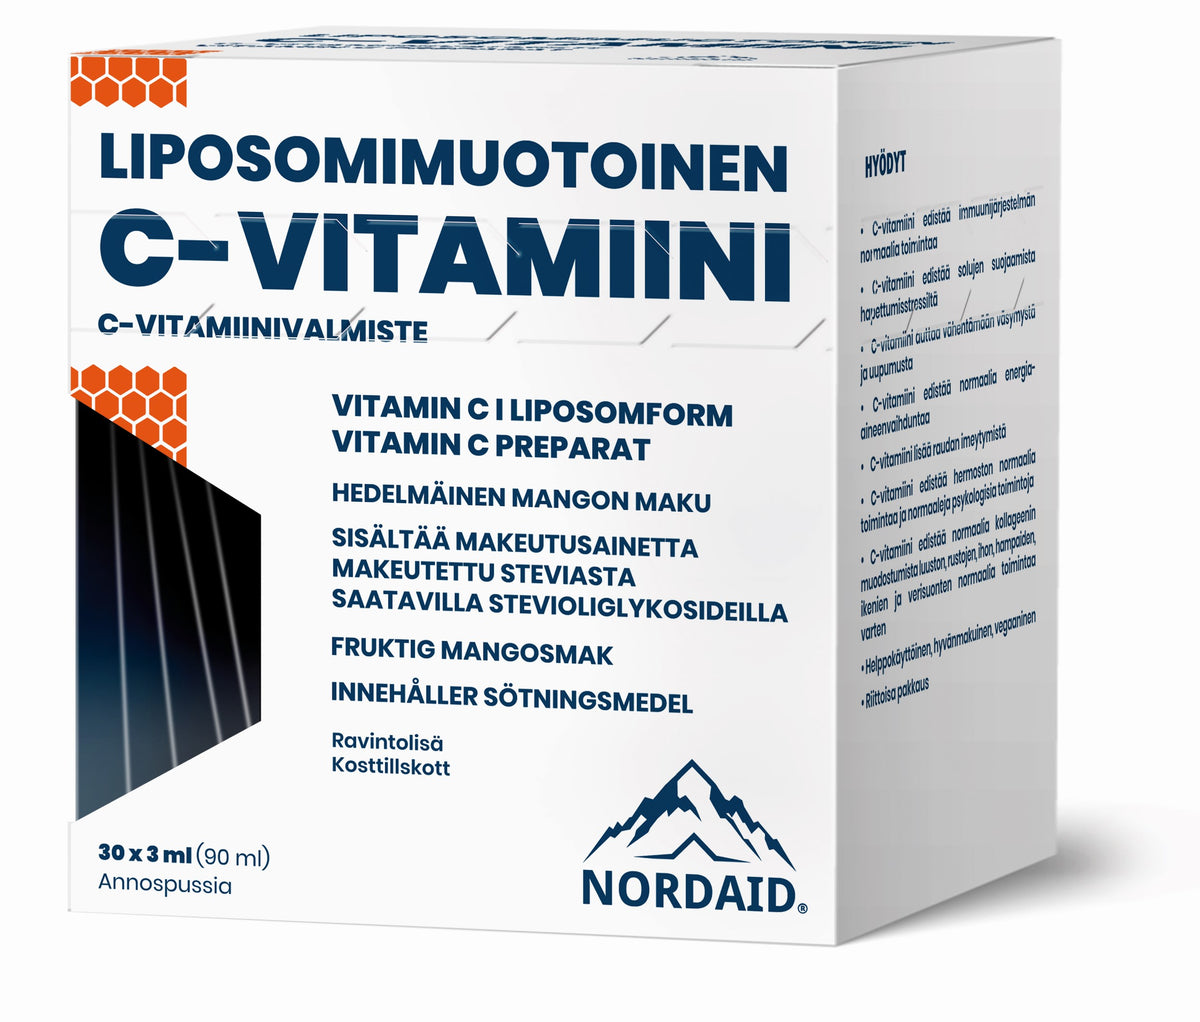 Nordaid Liposomi C-vitamiini 1000 mg - 30 x 3 ml annosta